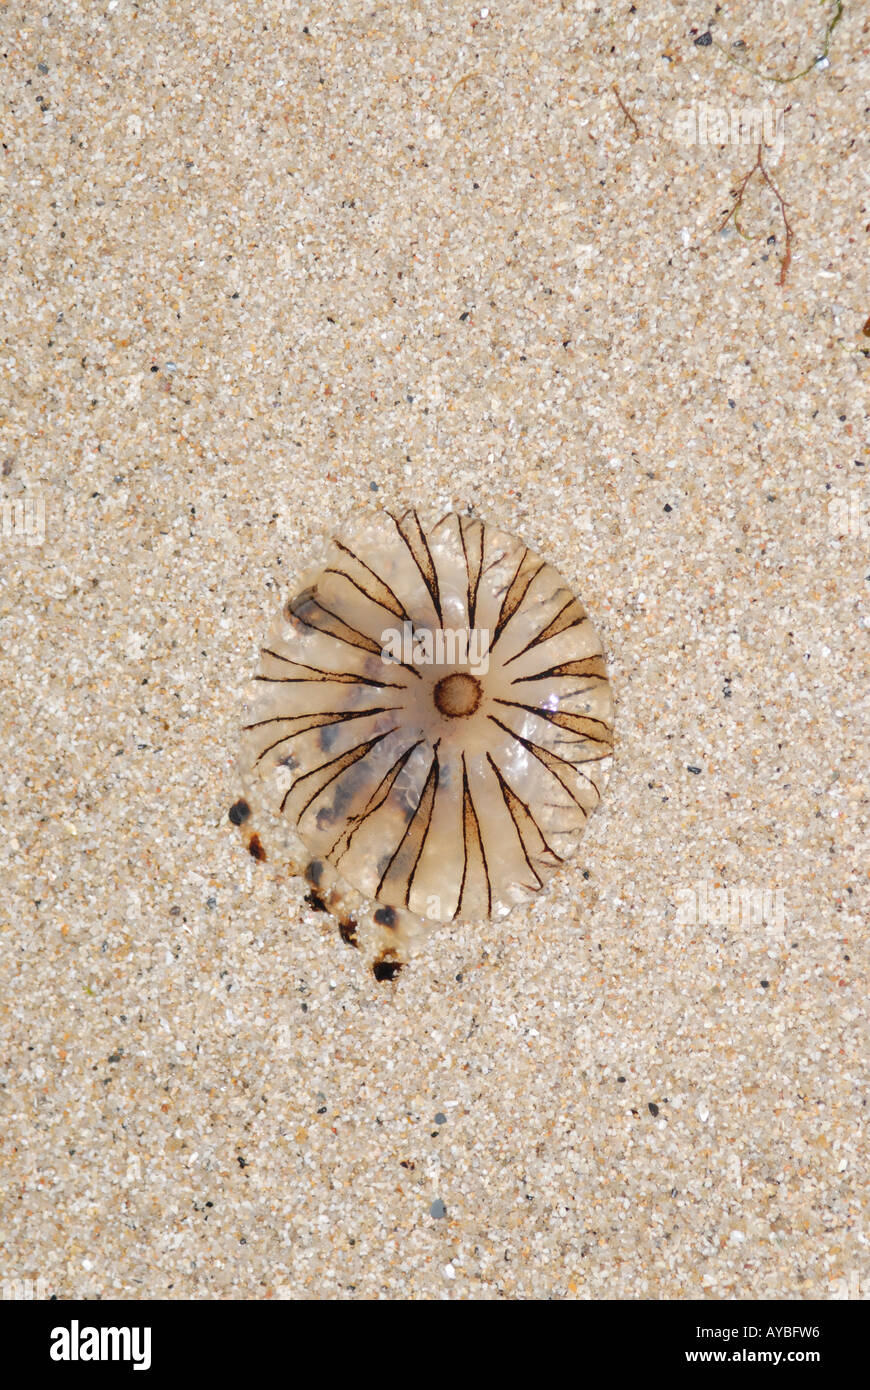 A Compass Jellyfish Chrysaora hyoscella stranded on a sandy beach Stock Photo